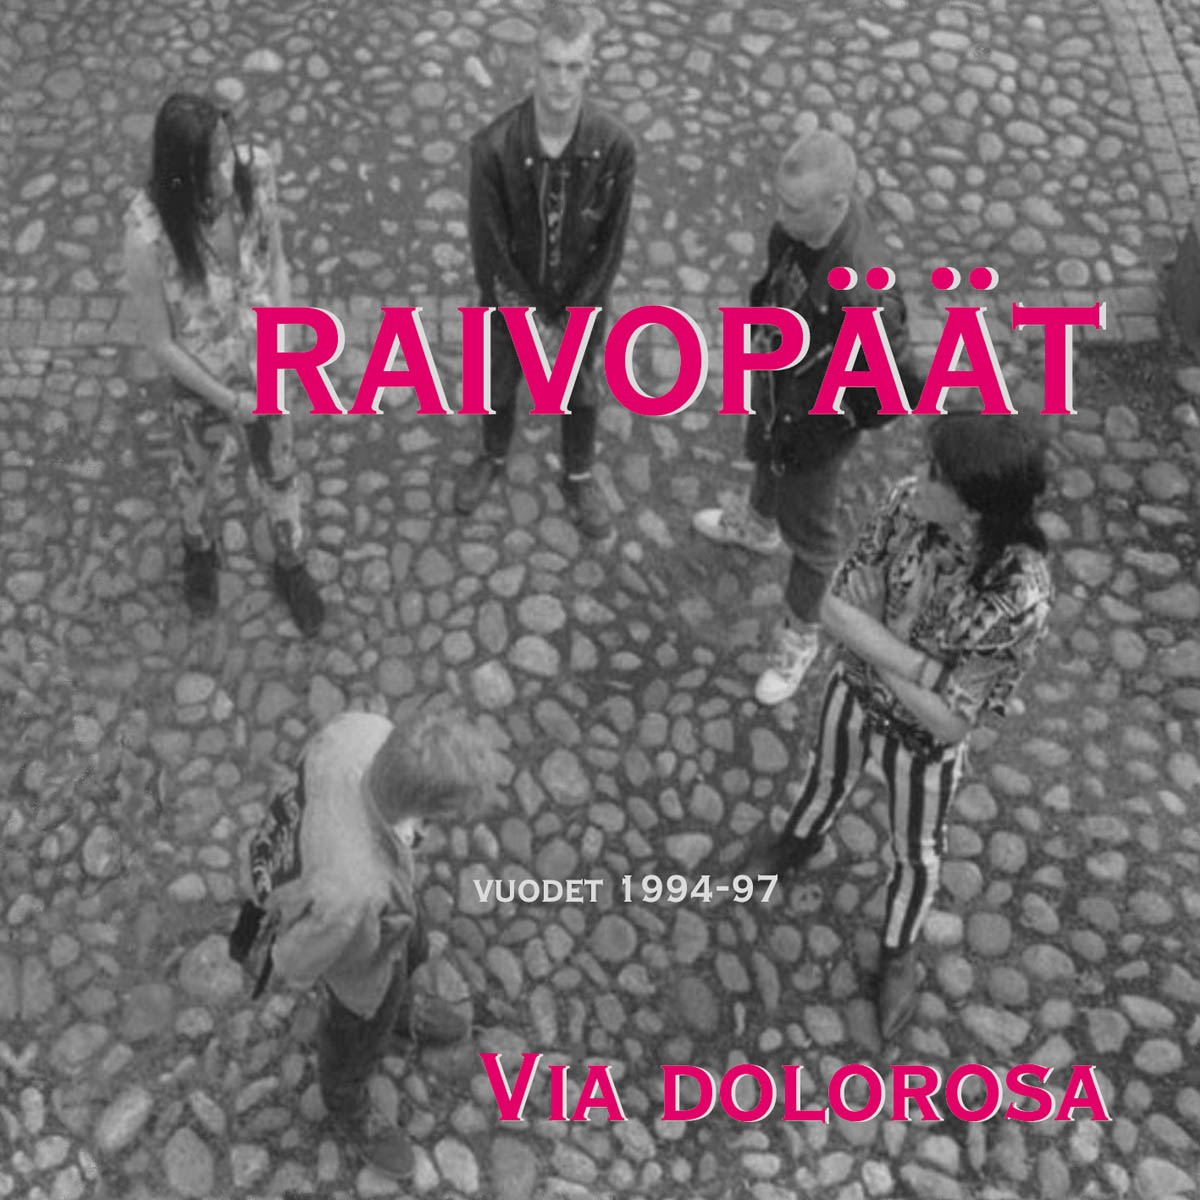 Raivop  t - Via Dolorosa - Vuodet 1994-97 - CD